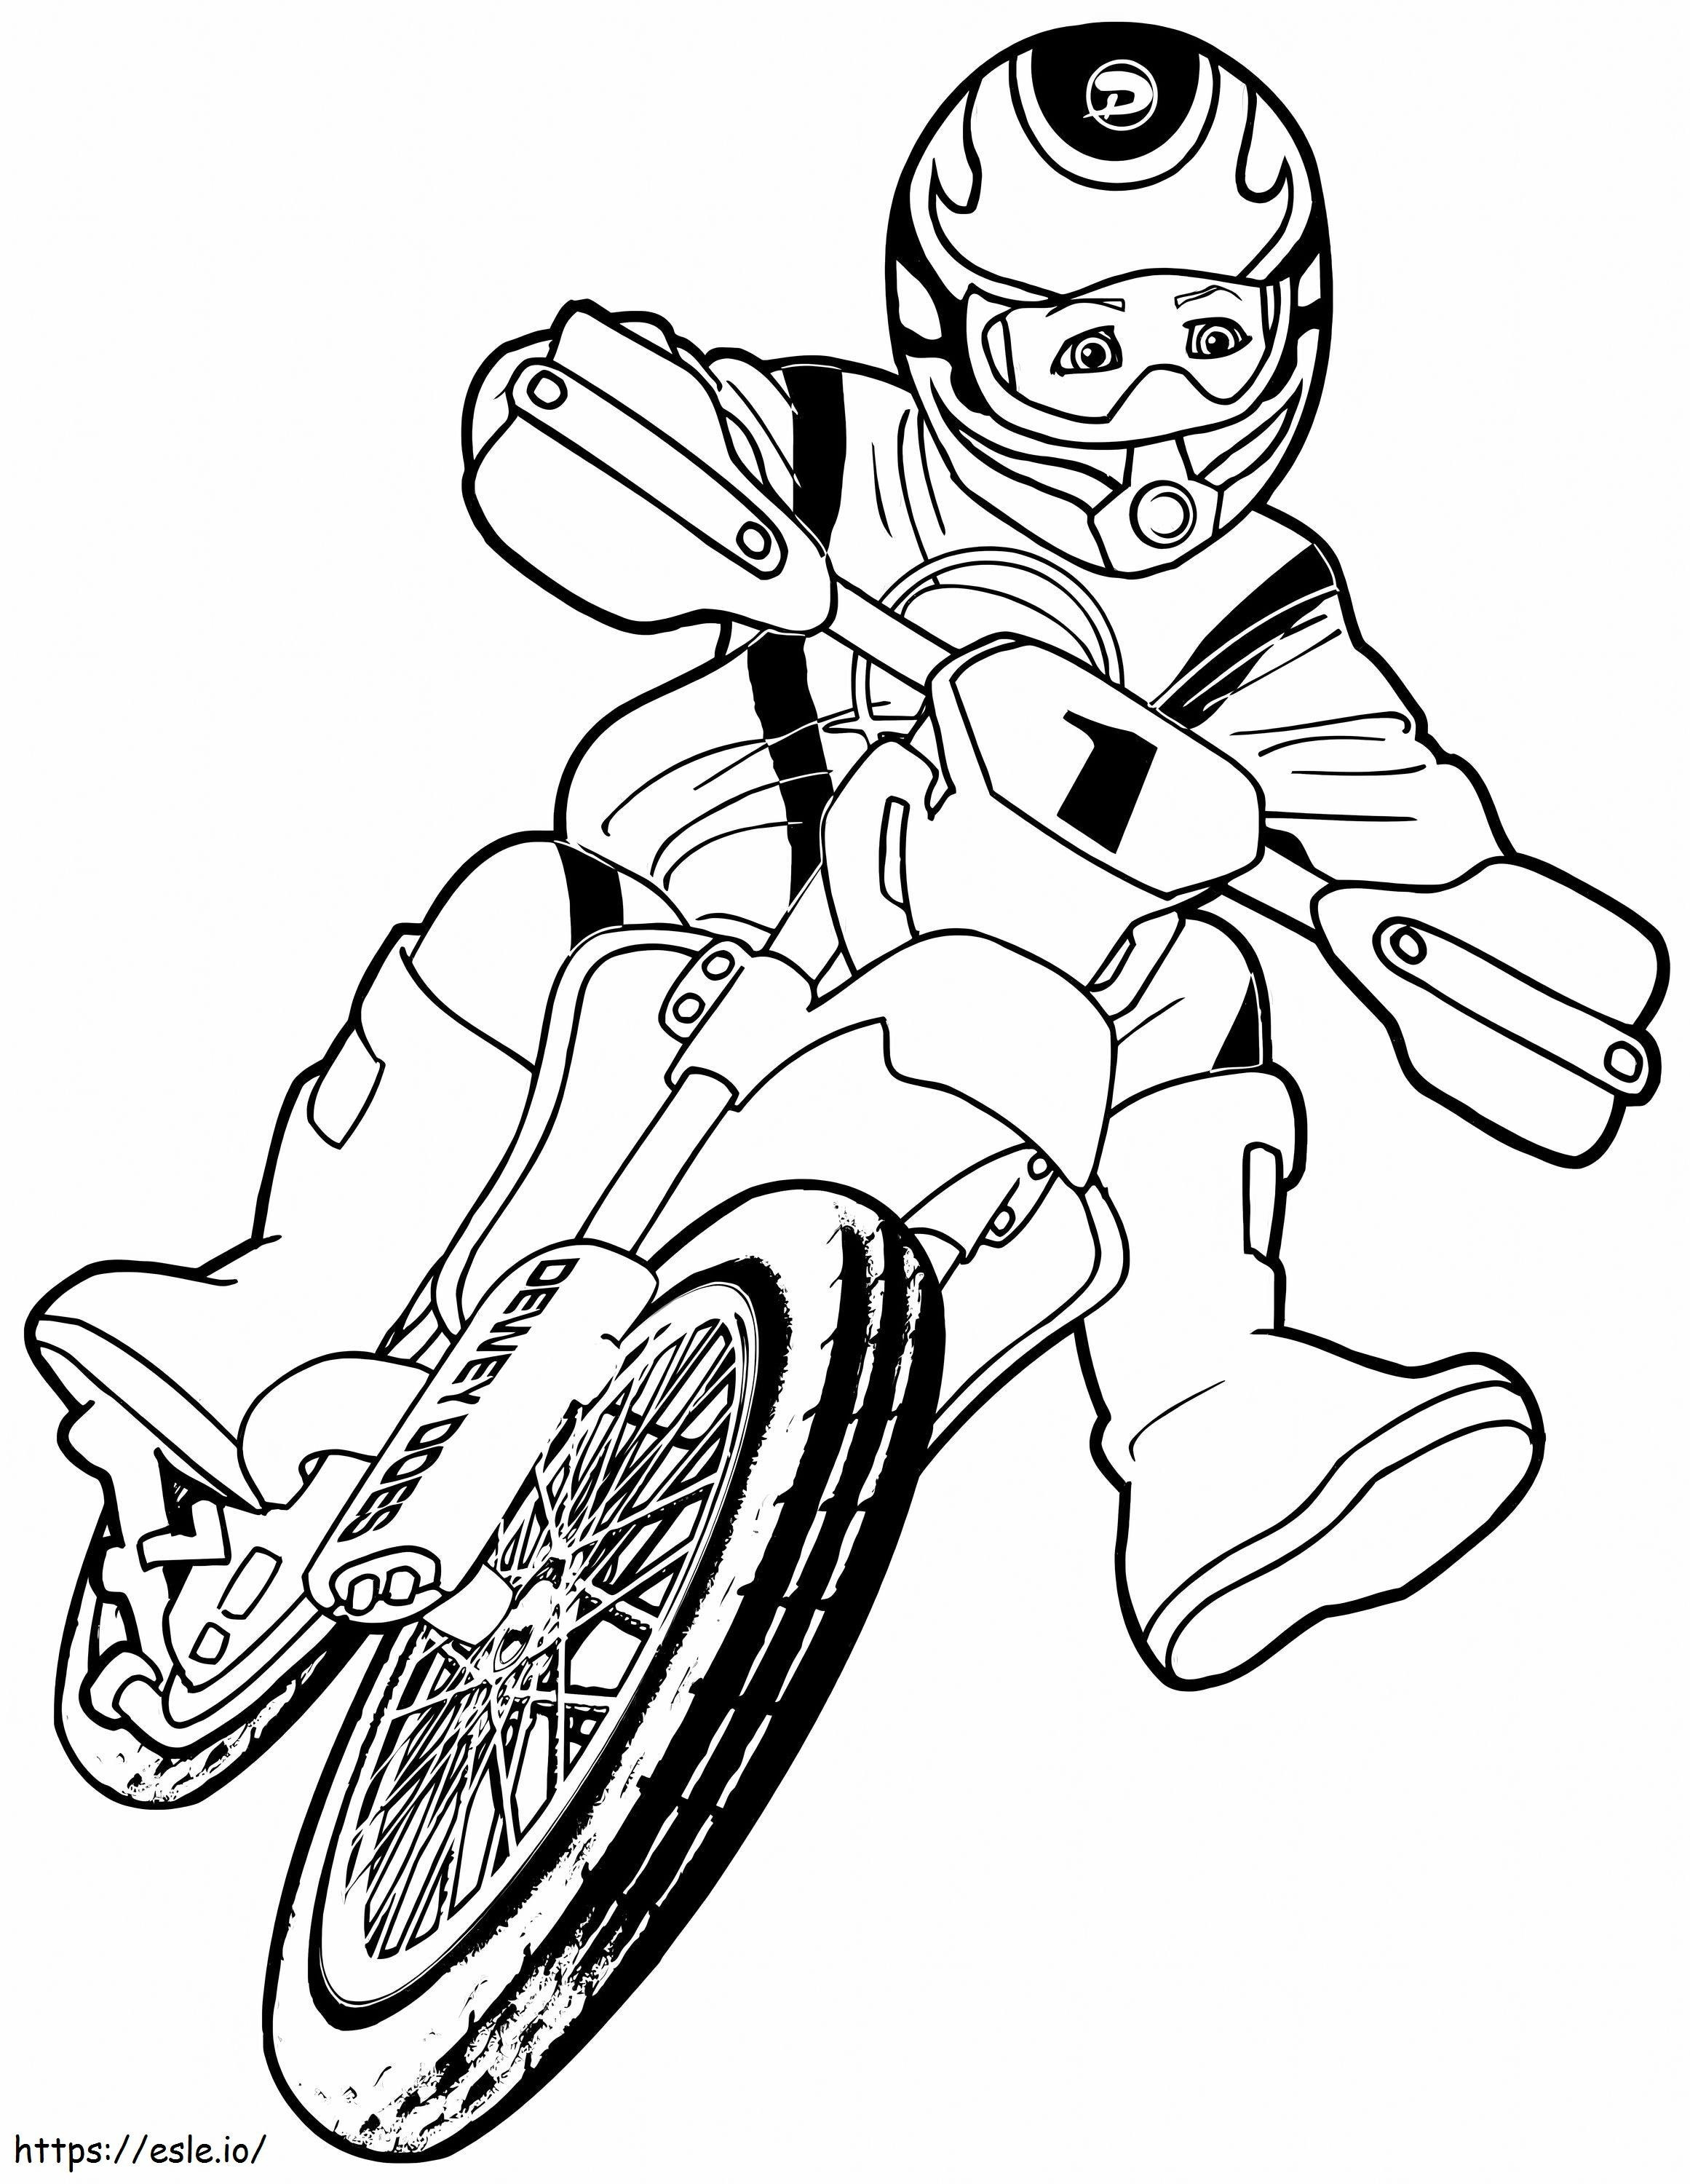 Junge fährt Motorrad ausmalbilder